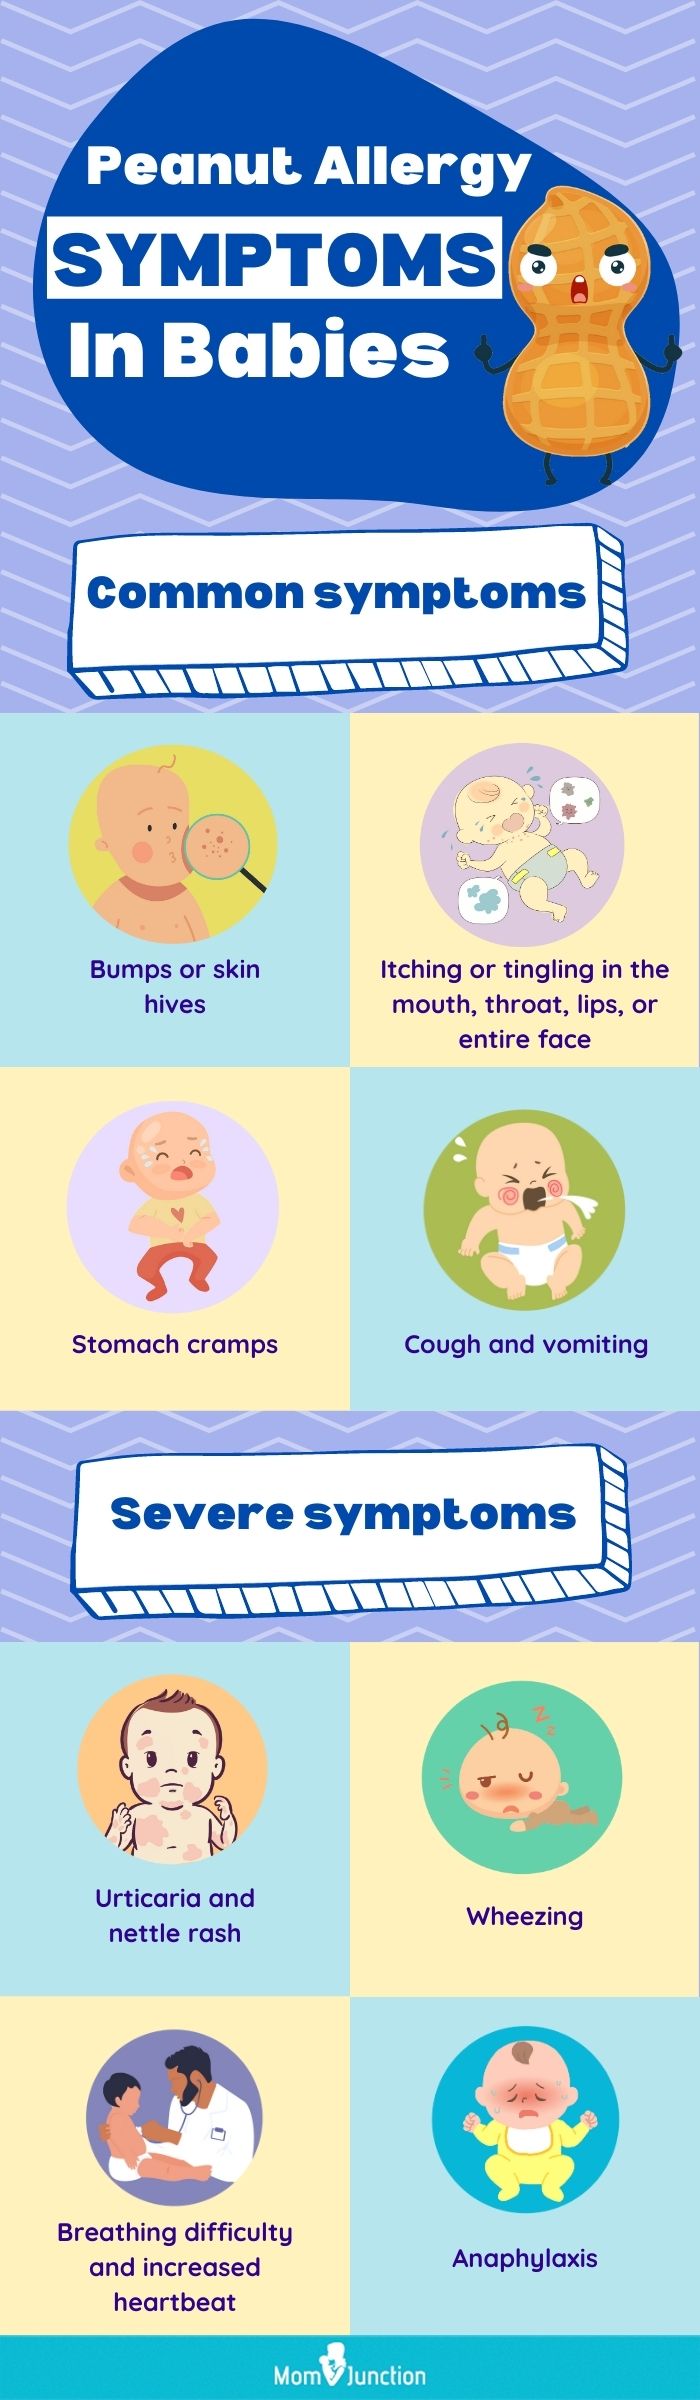 peanut allergy symptoms in babies (infographic)